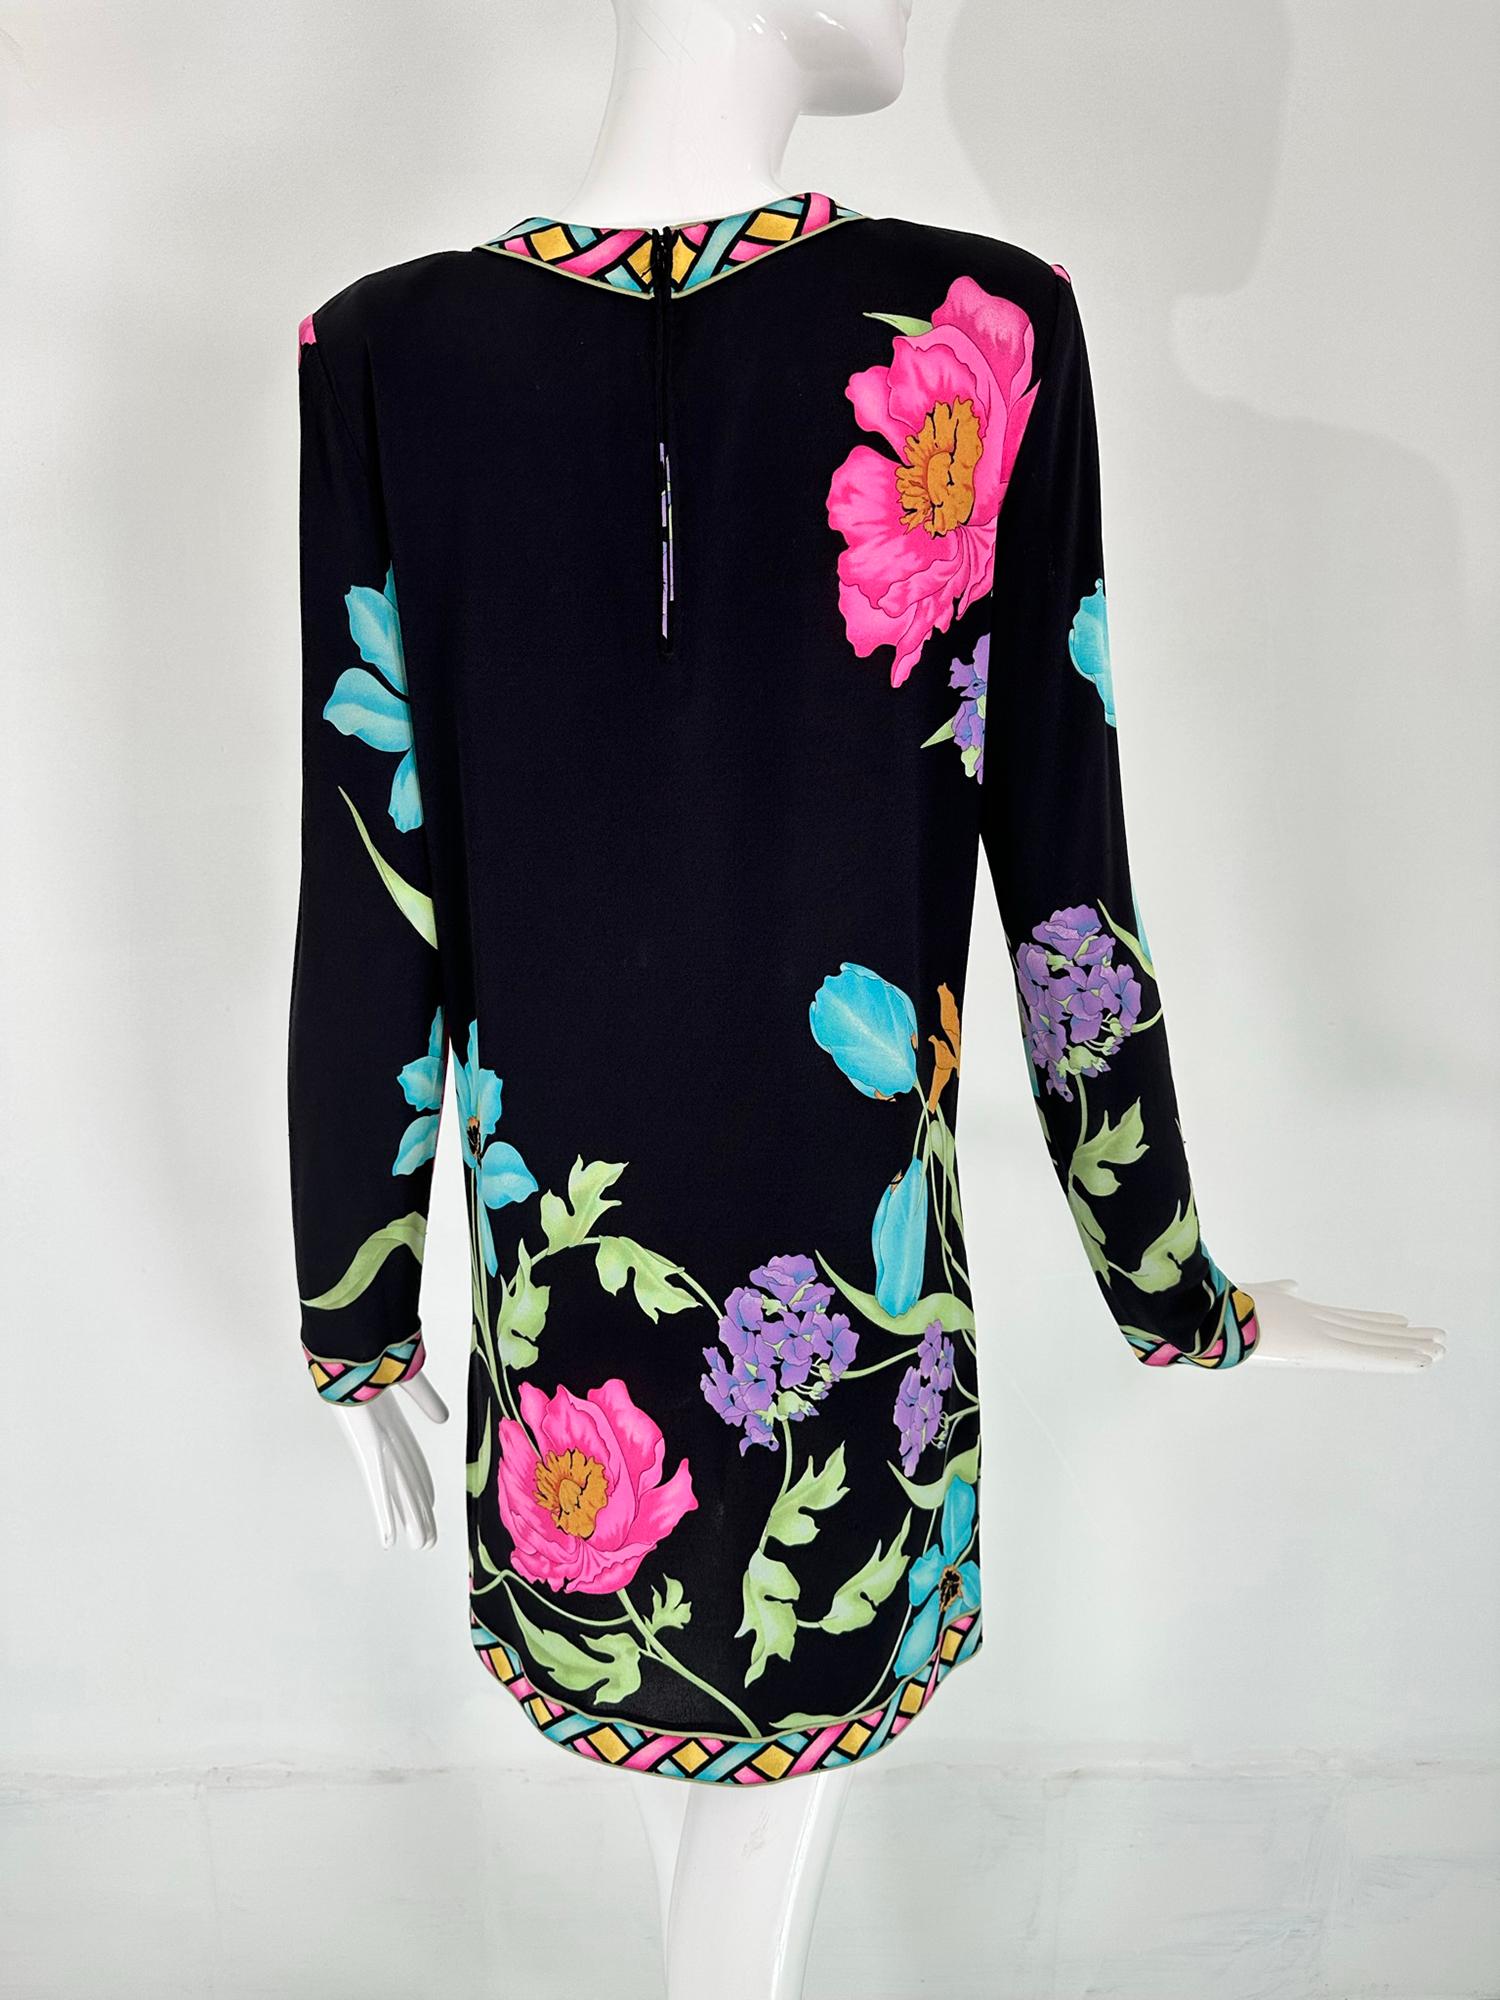 Averaro Bessi Spectacular Silk Vibrant Floral Tunic Dress 12  For Sale 3